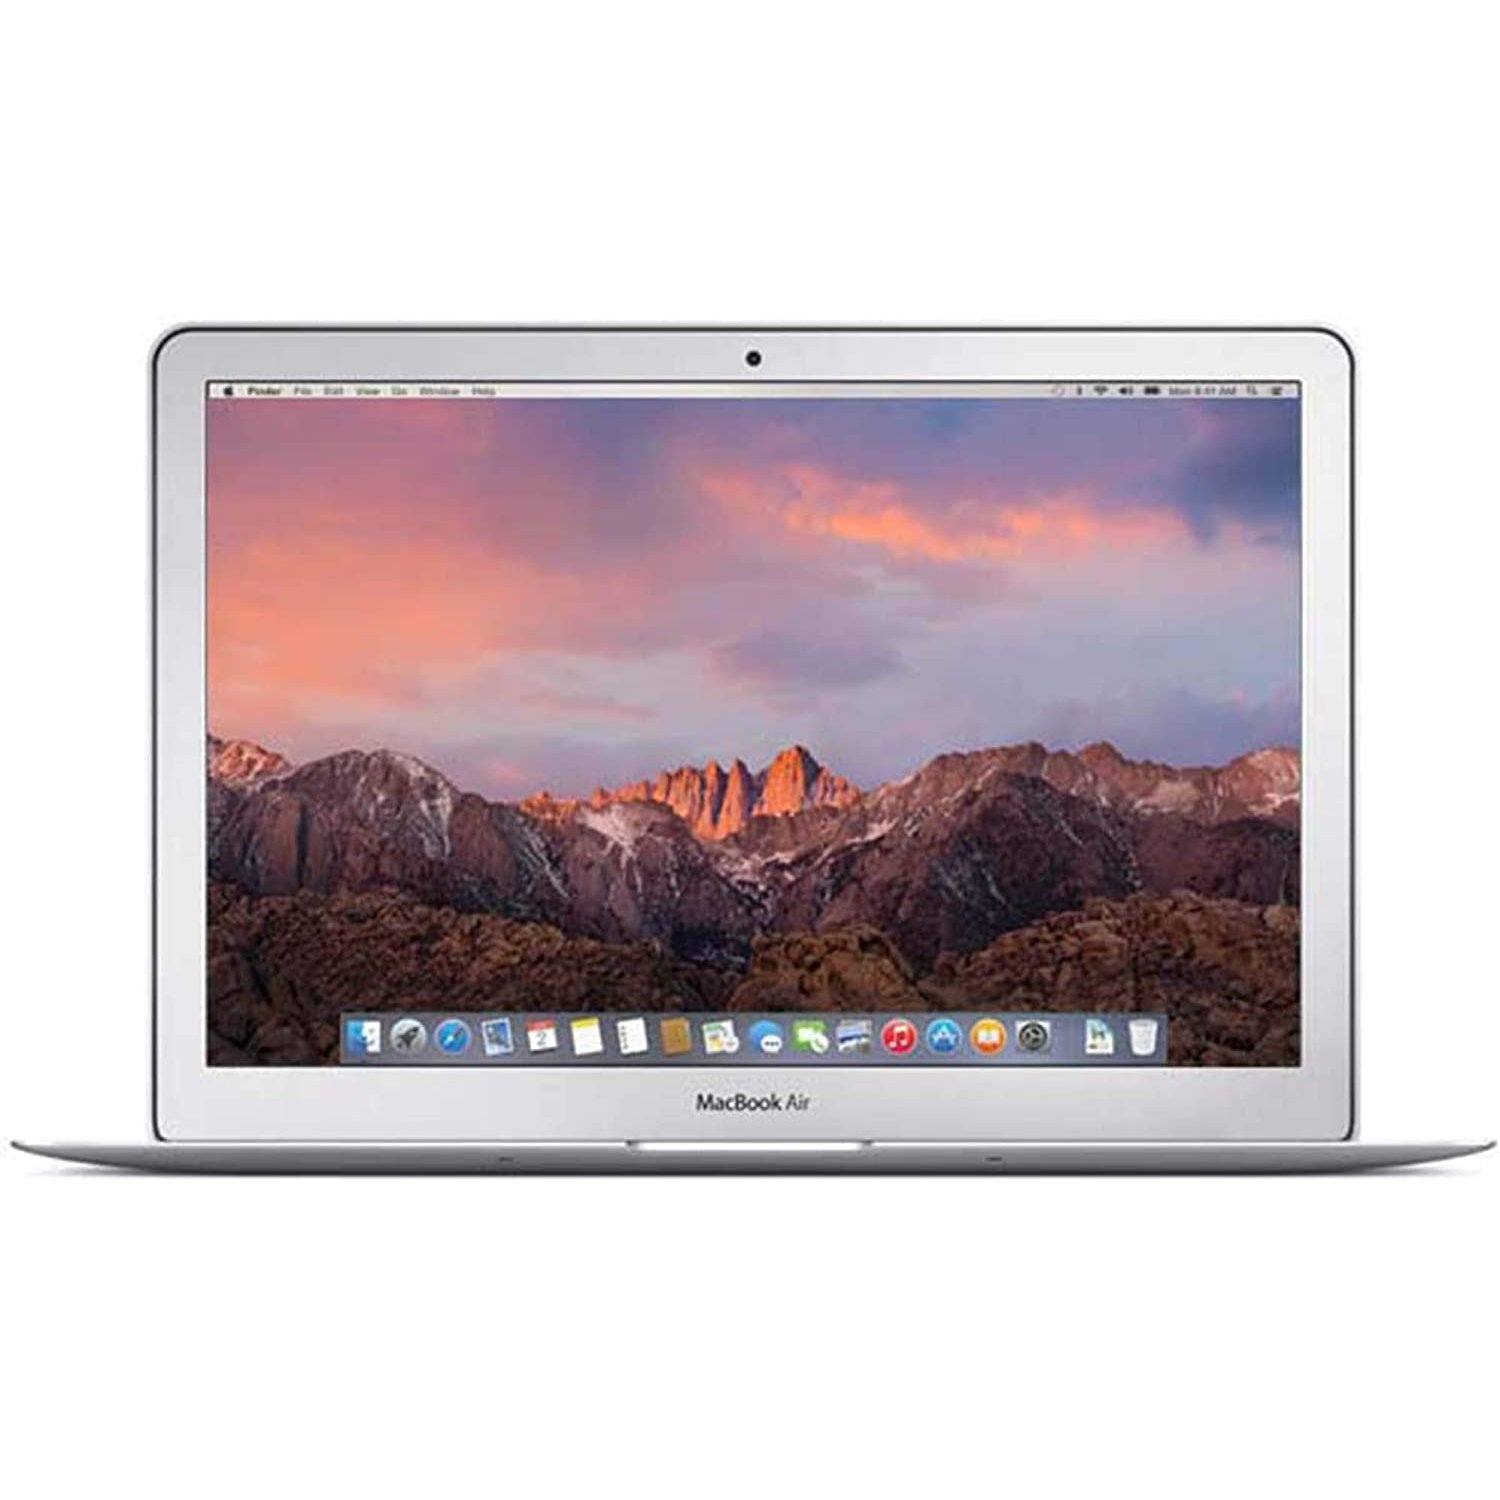 Apple MacBook Air 13.3 1.6GHz Core i5 4GB 128GB SSD MJVE2LL/A Mac OS 2015  (Refurbished)